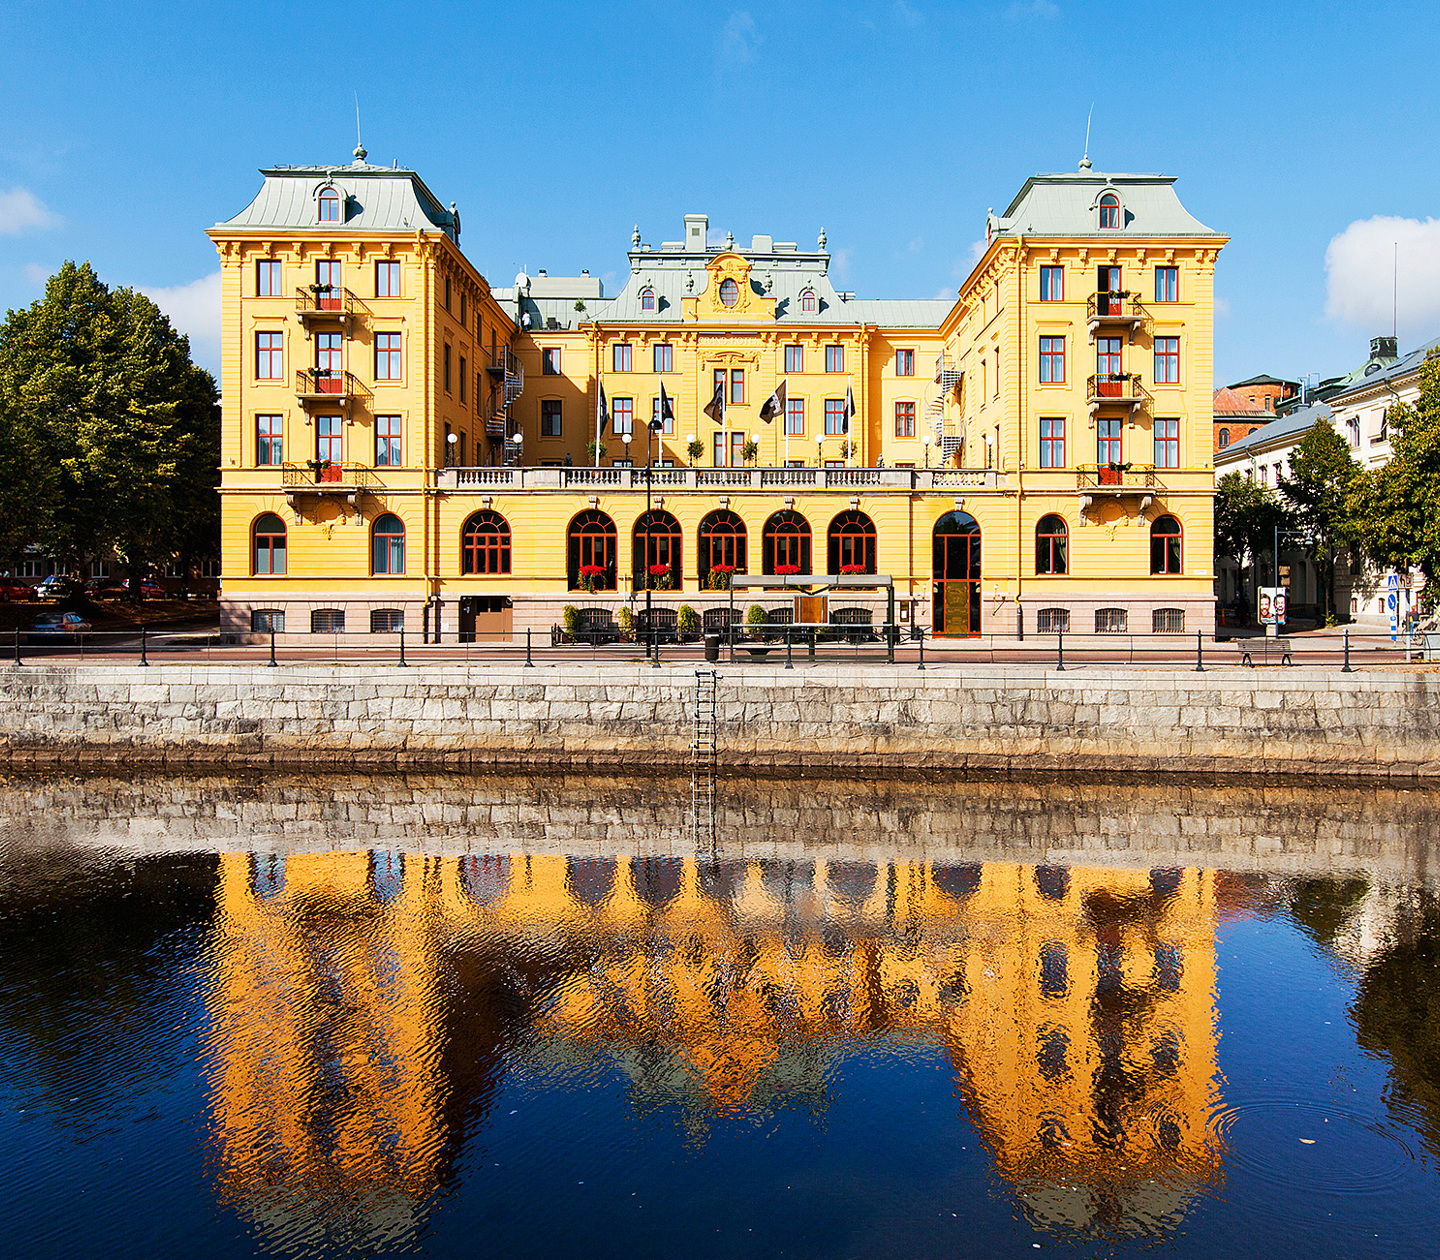 The facade of Elite Grand Hotel in Gävle